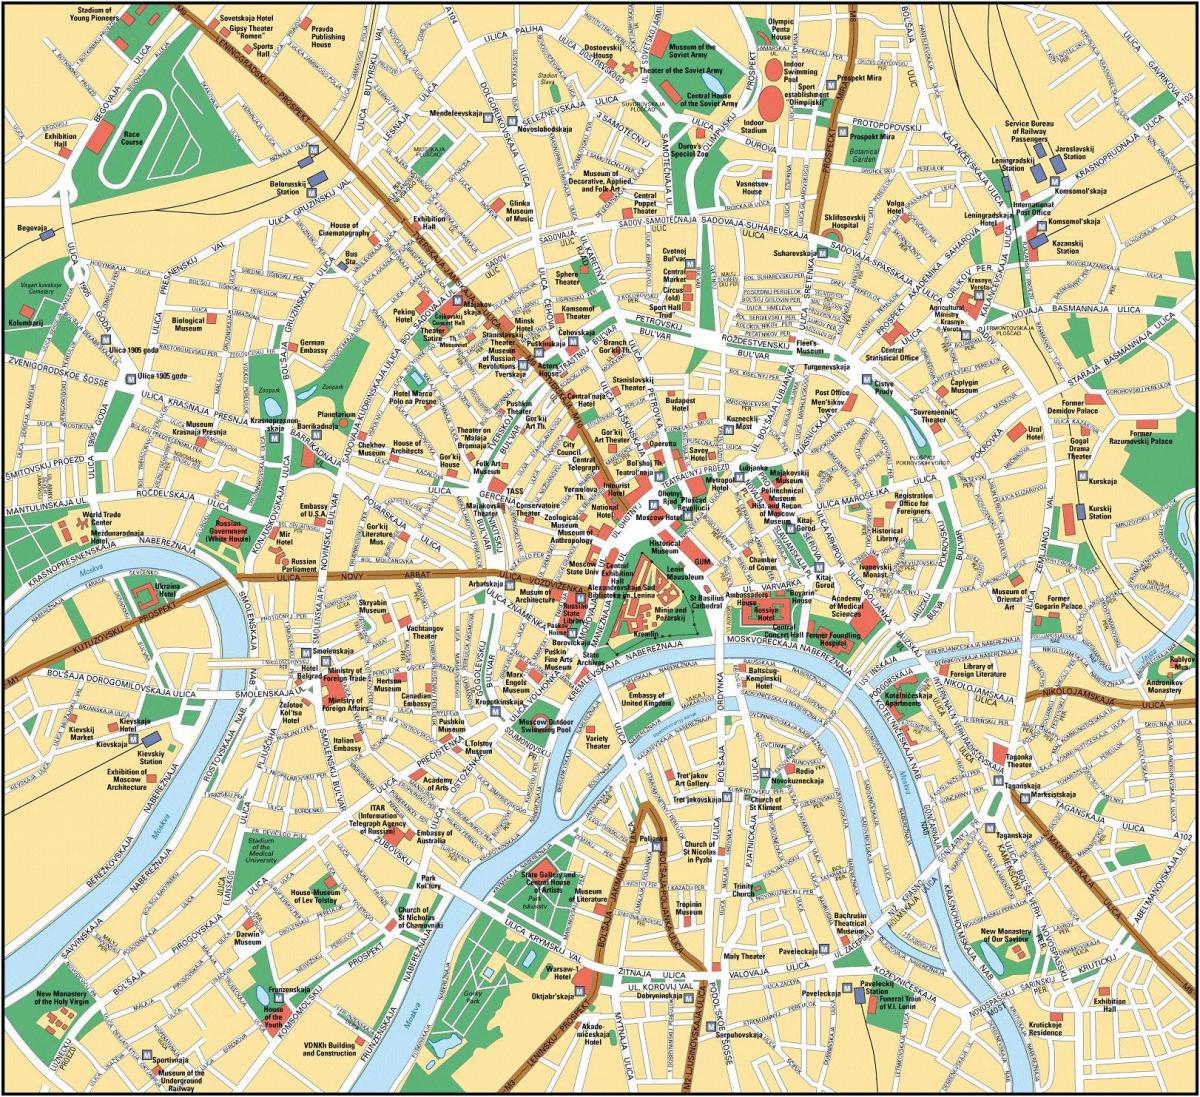 Moskva શહેર નકશો